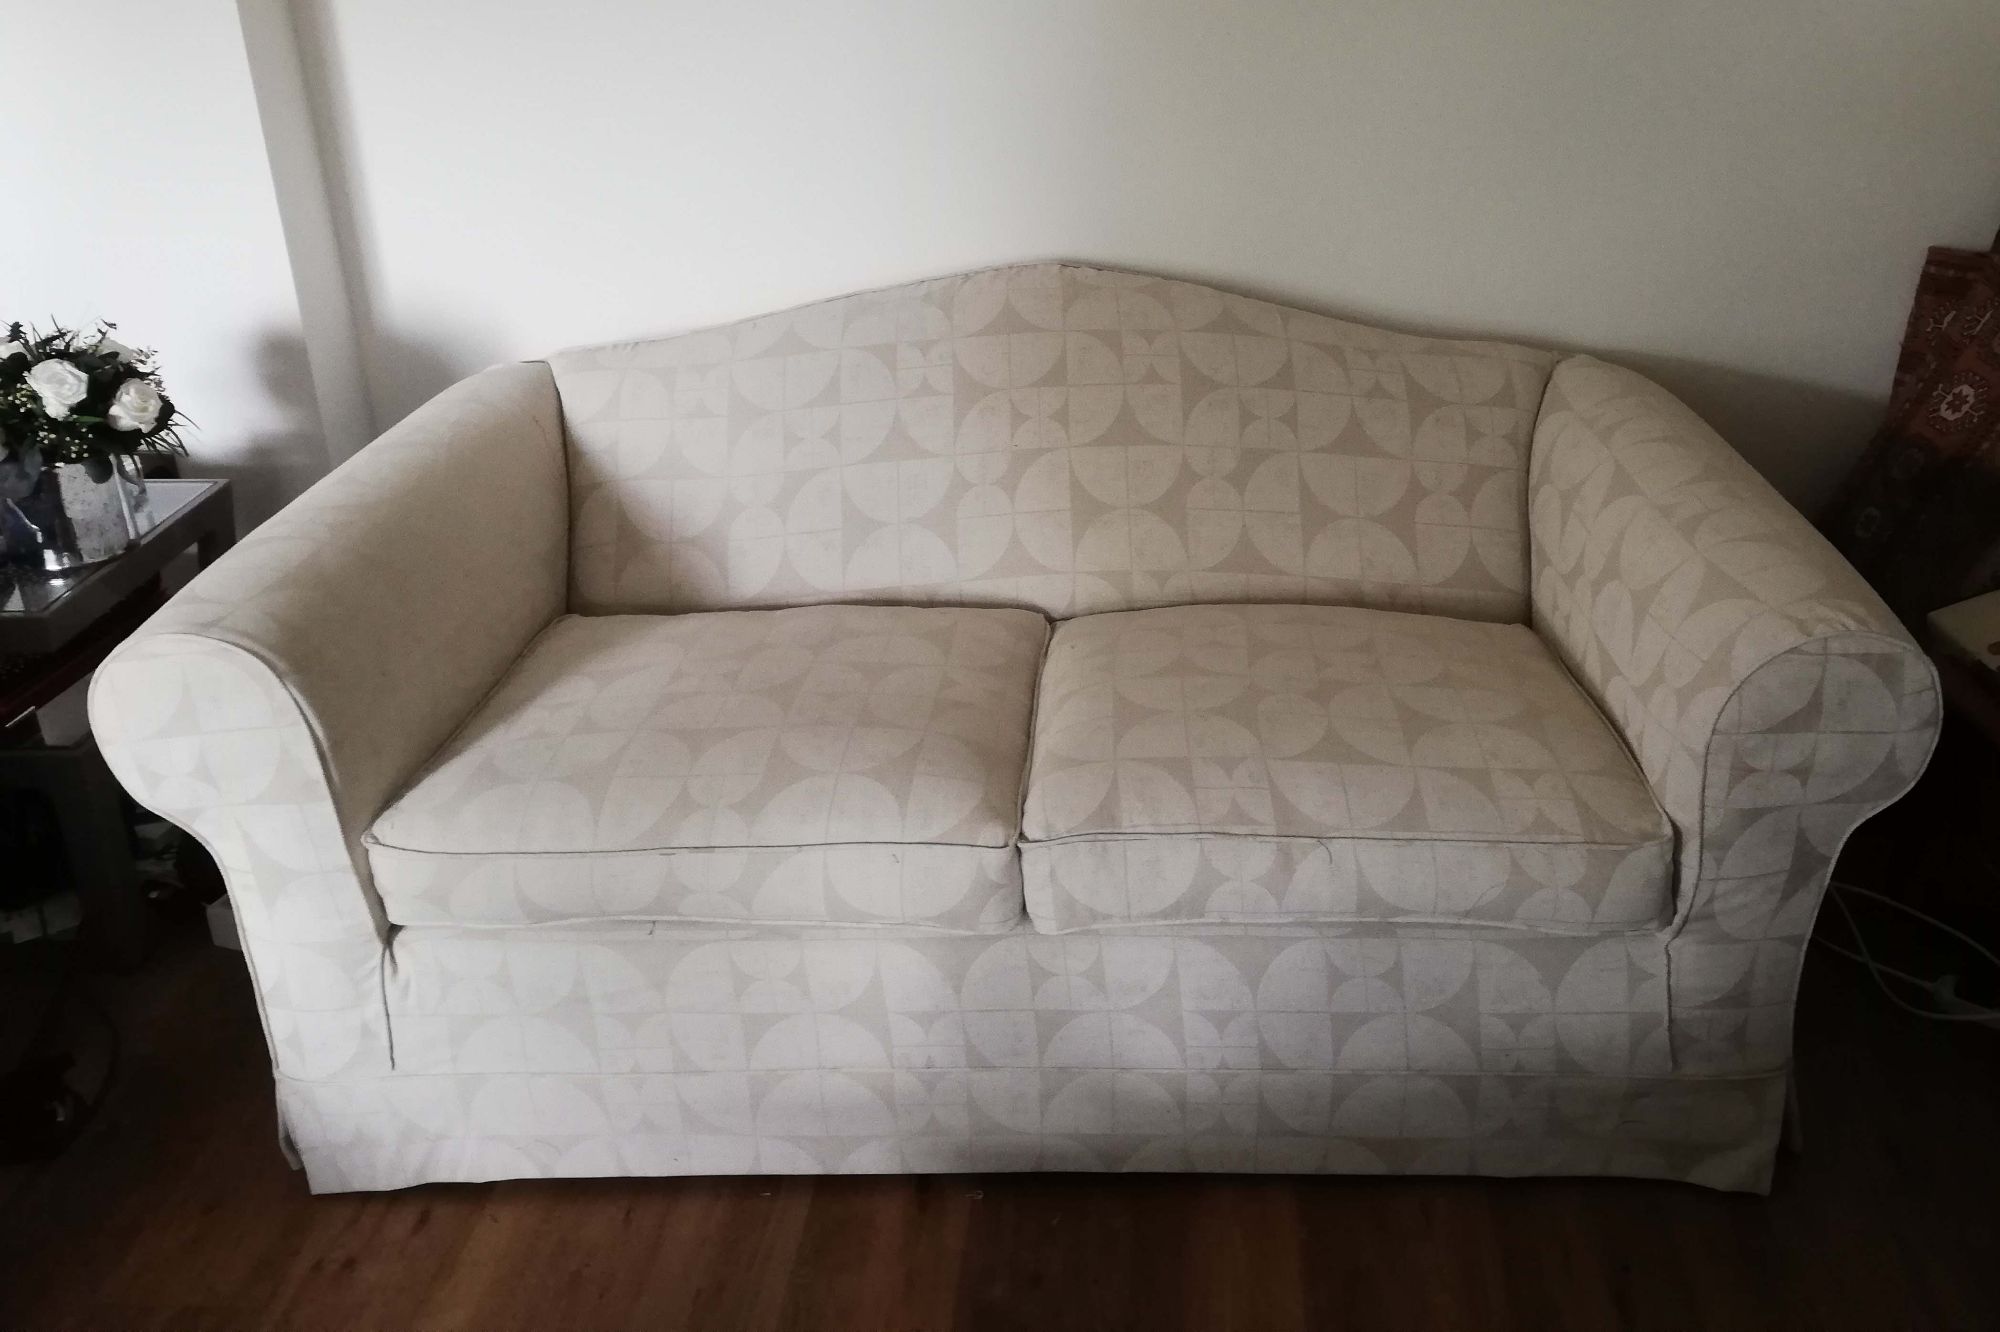 Geometric sofa cover